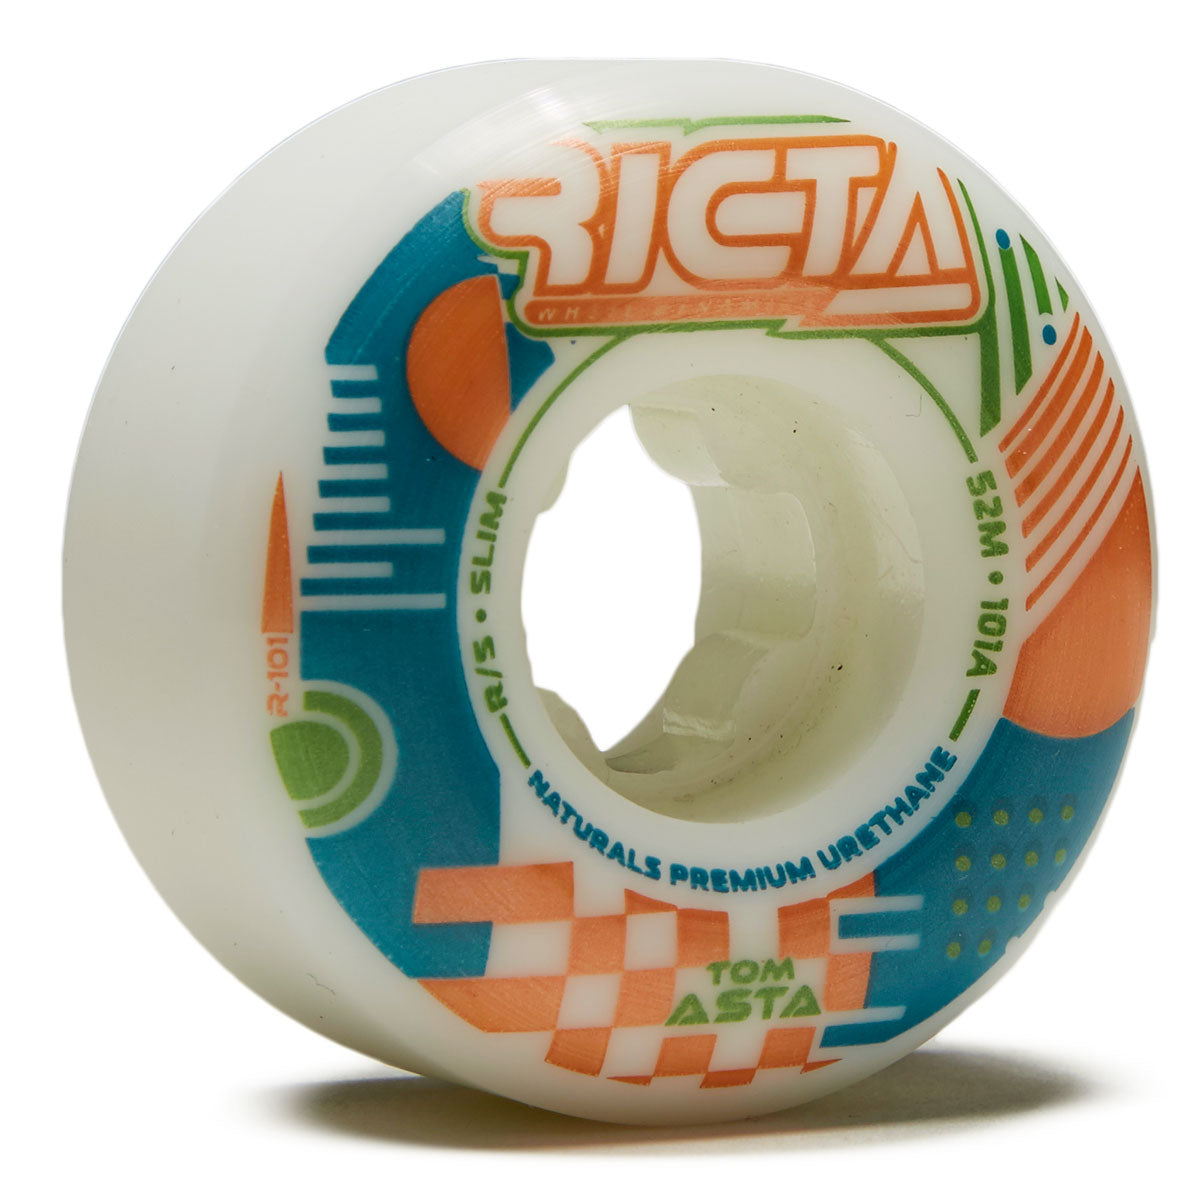 Ricta Asta Flux Naturals Slim 101a Skateboard Wheels - White - 52mm image 1